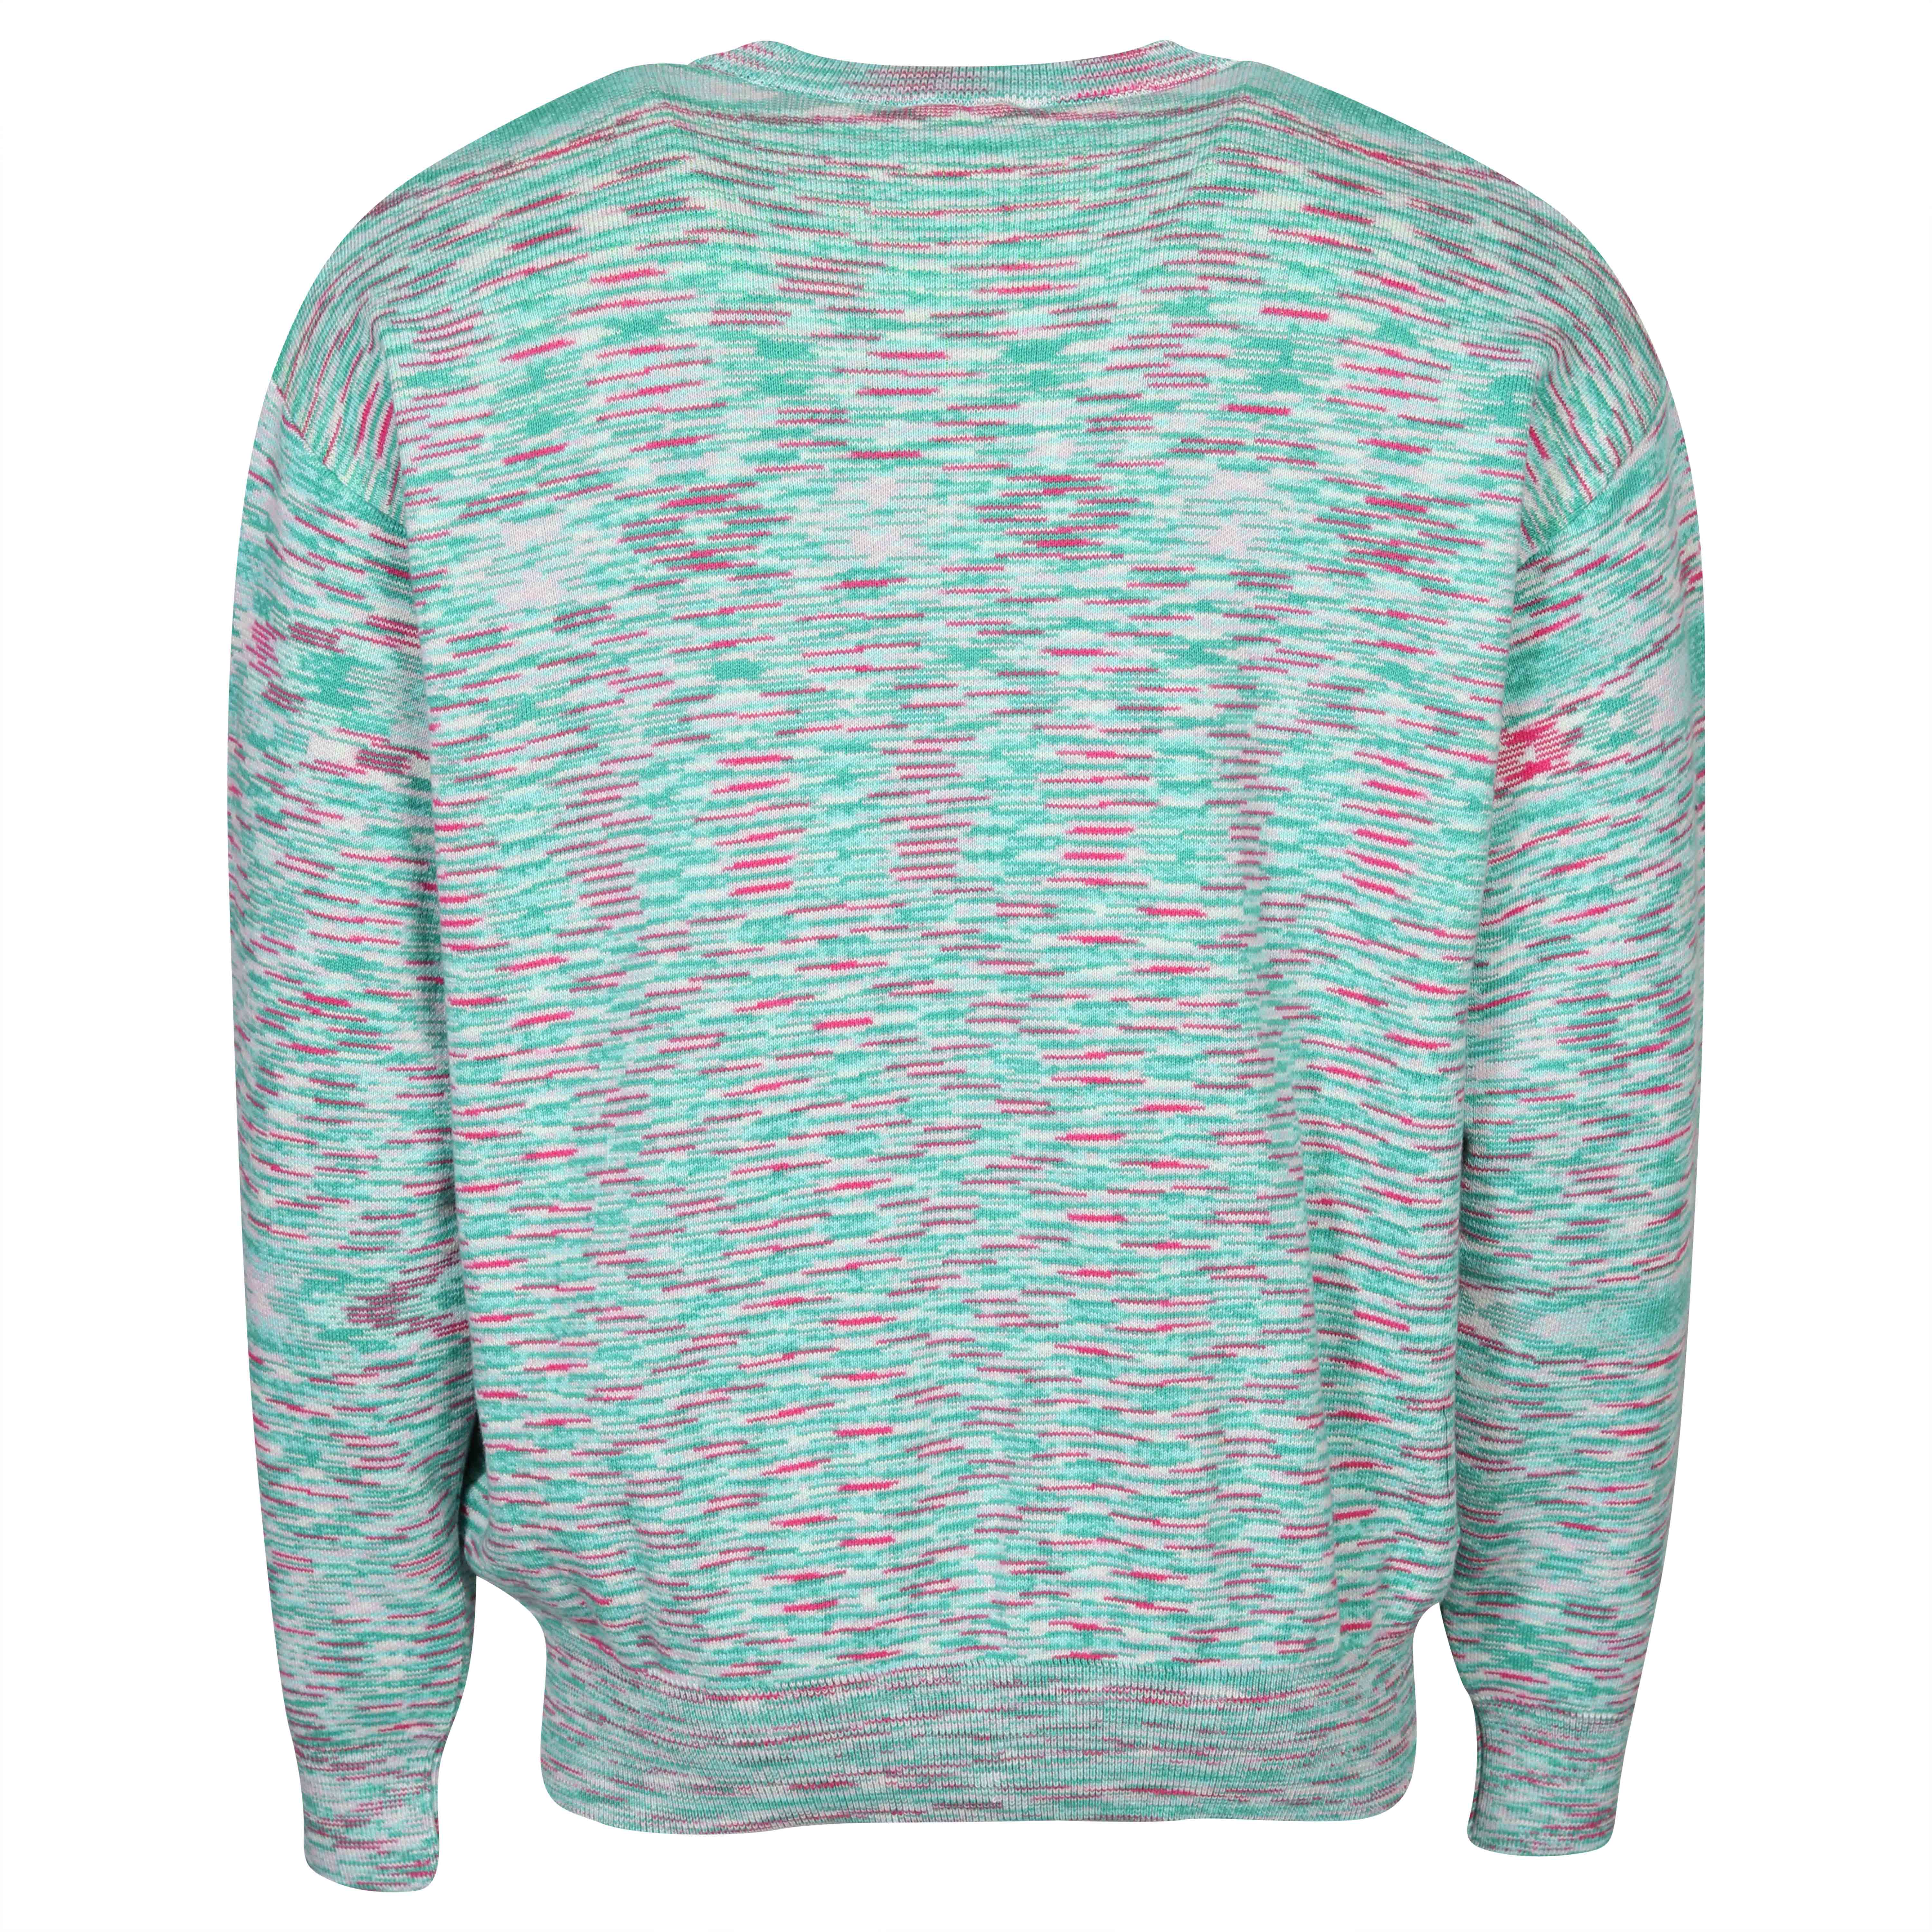 Unisex Aries Space Dye No Problemo Knit Sweater in Aqua